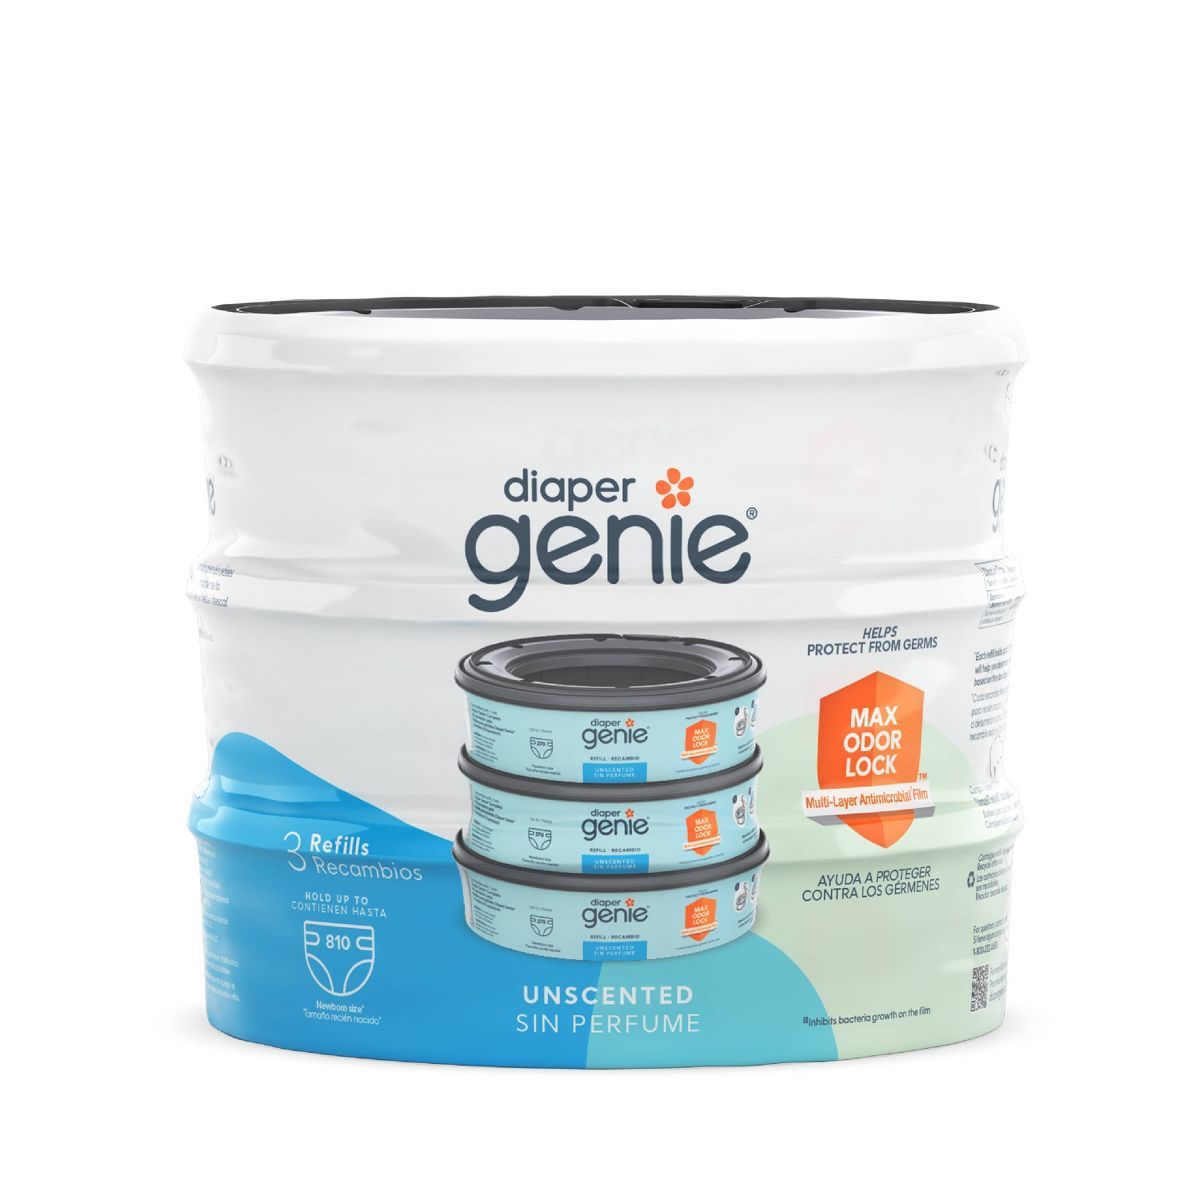 Diaper Genie Diaper Disposal Pail System Refill - 3pk | Target